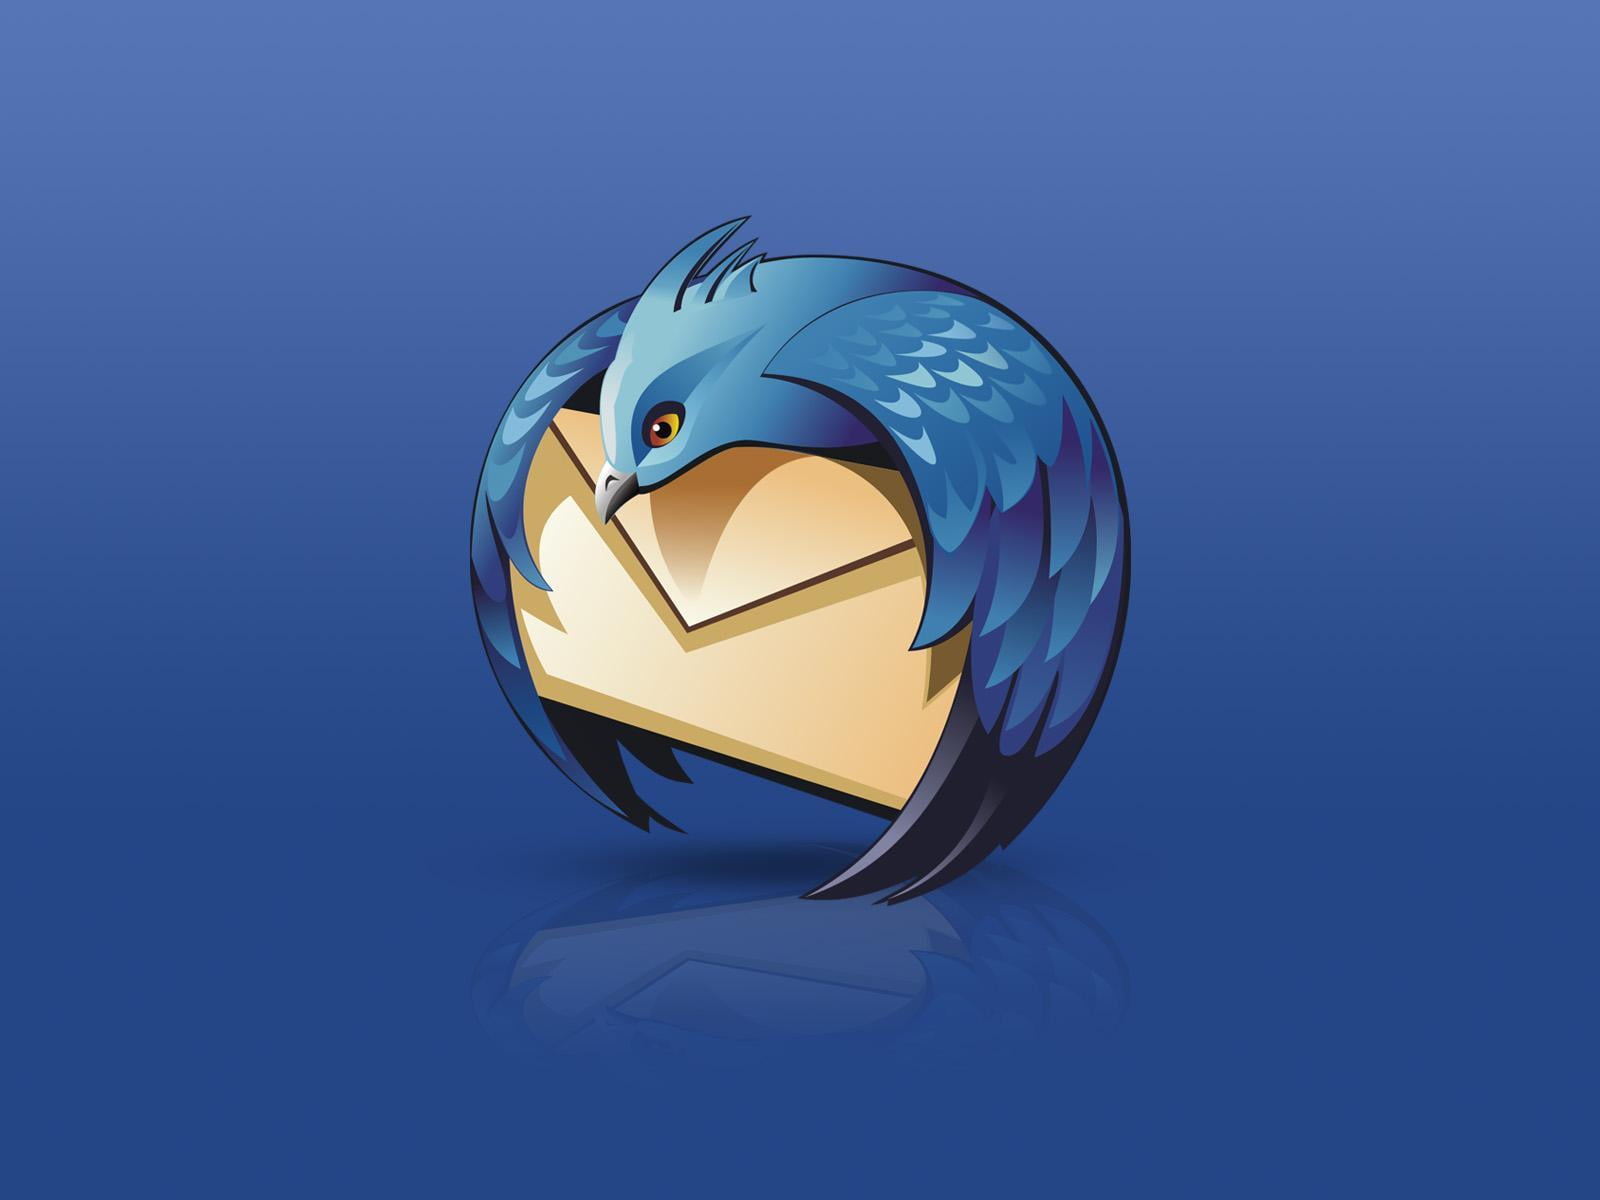 Mozilla Thunderbird, bird carrying mail logo, Computers, Mozilla Firefox